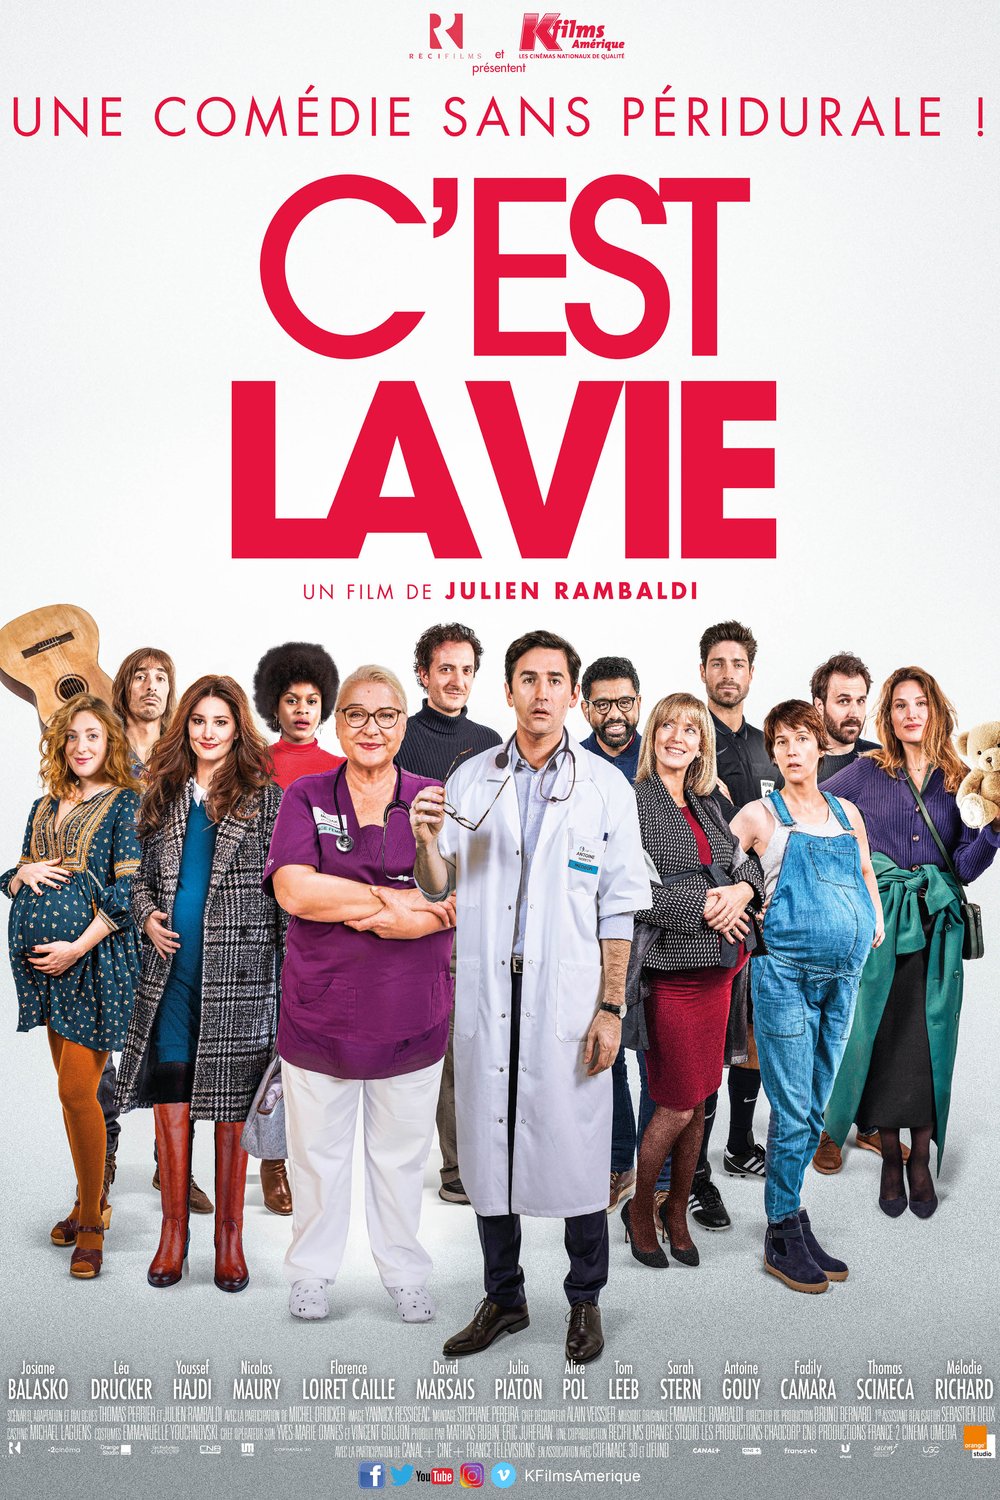 Poster of the movie C'est la vie